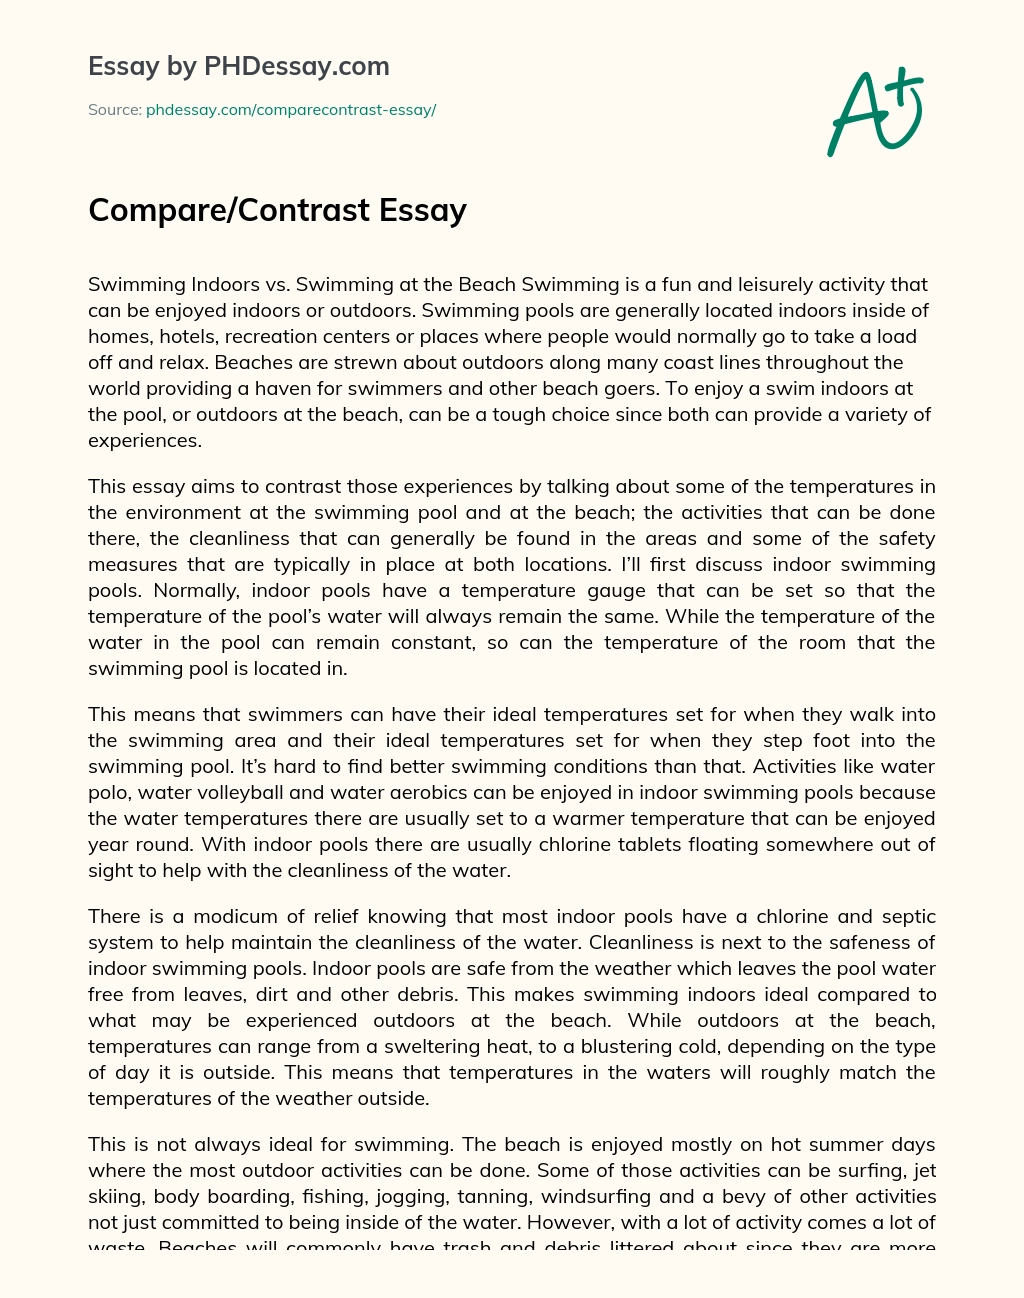 Compare/Contrast Essay